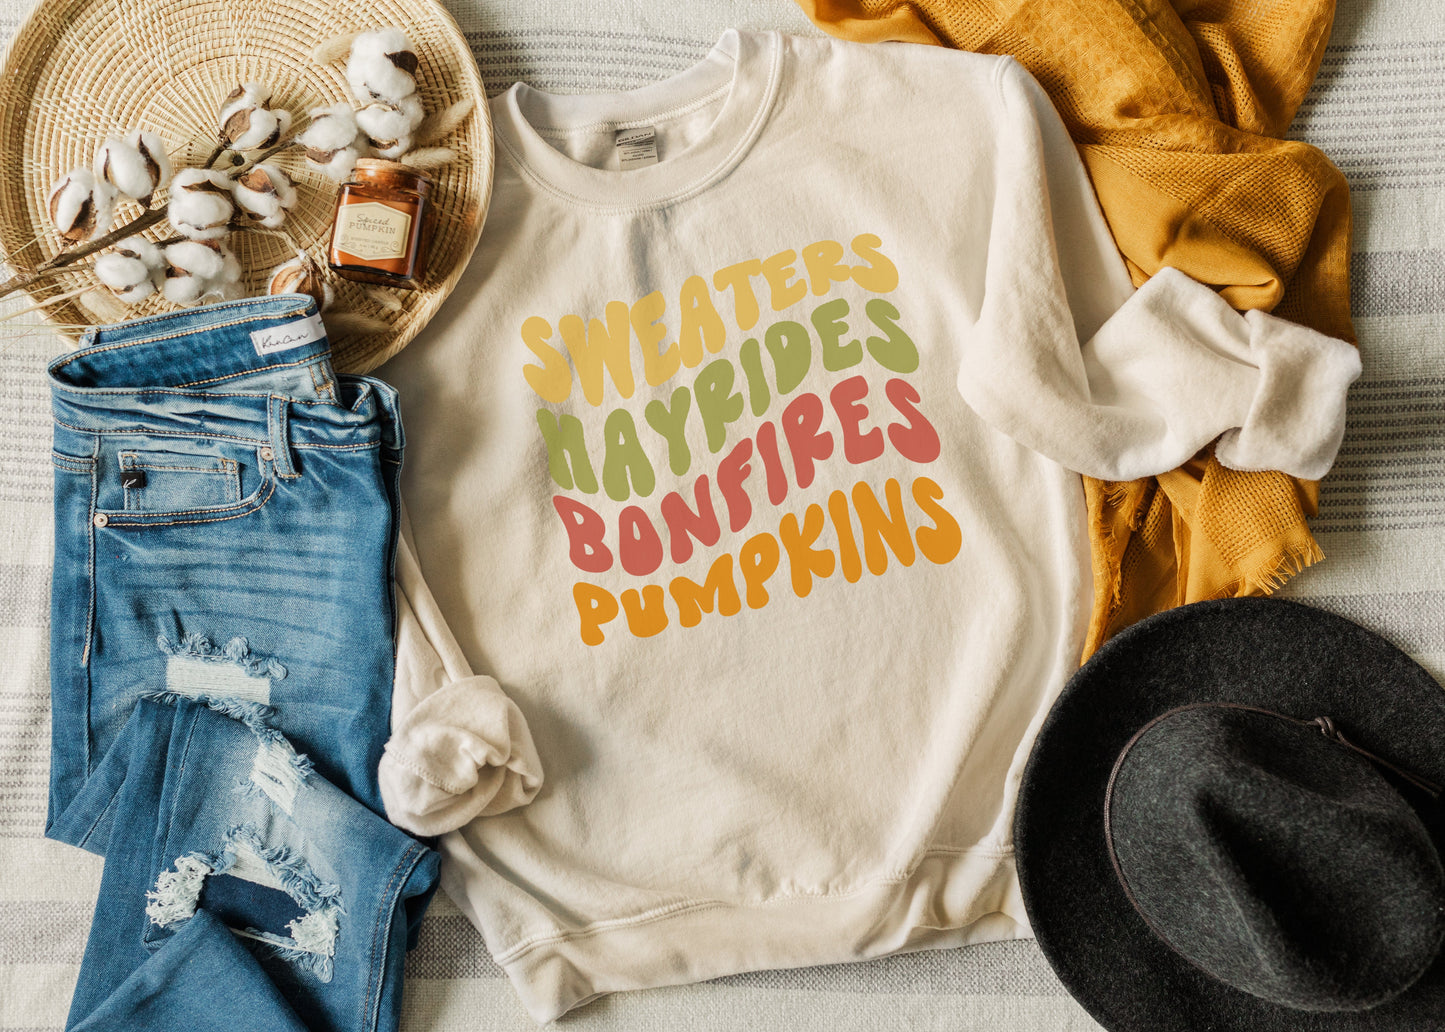 Sweaters, Hayrides, Bonfires & Pumpkins Crewneck Sweatshirt